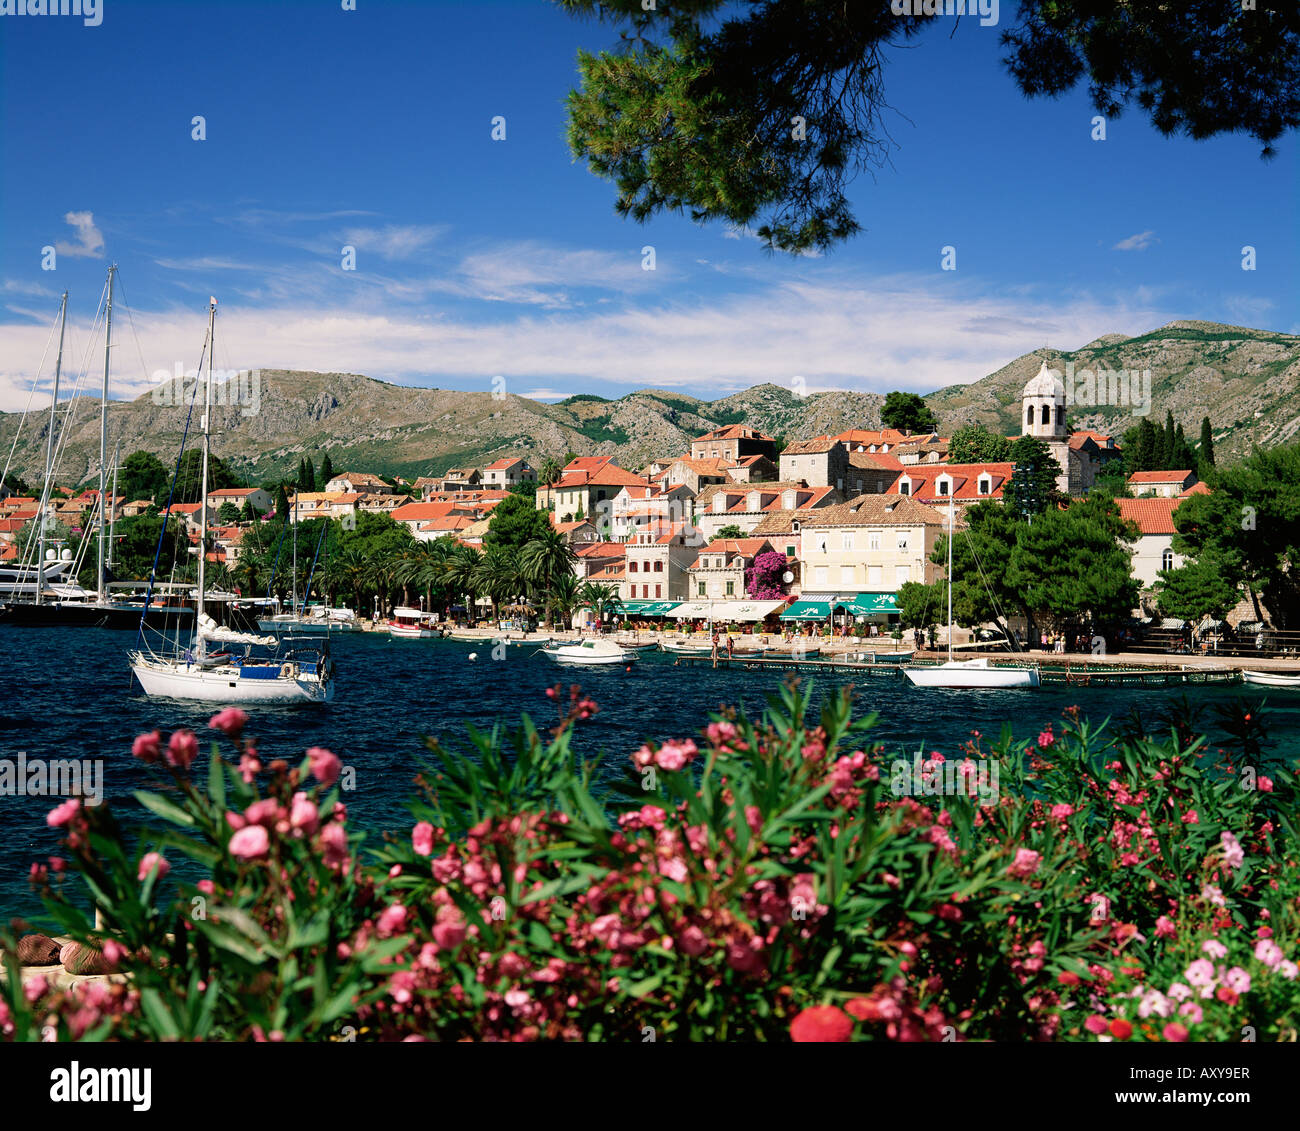 The Old Town, Cavtat, Dubrovnik Riviera, Dalmatia, Dalmatian coast, Croatia, Europe Stock Photo